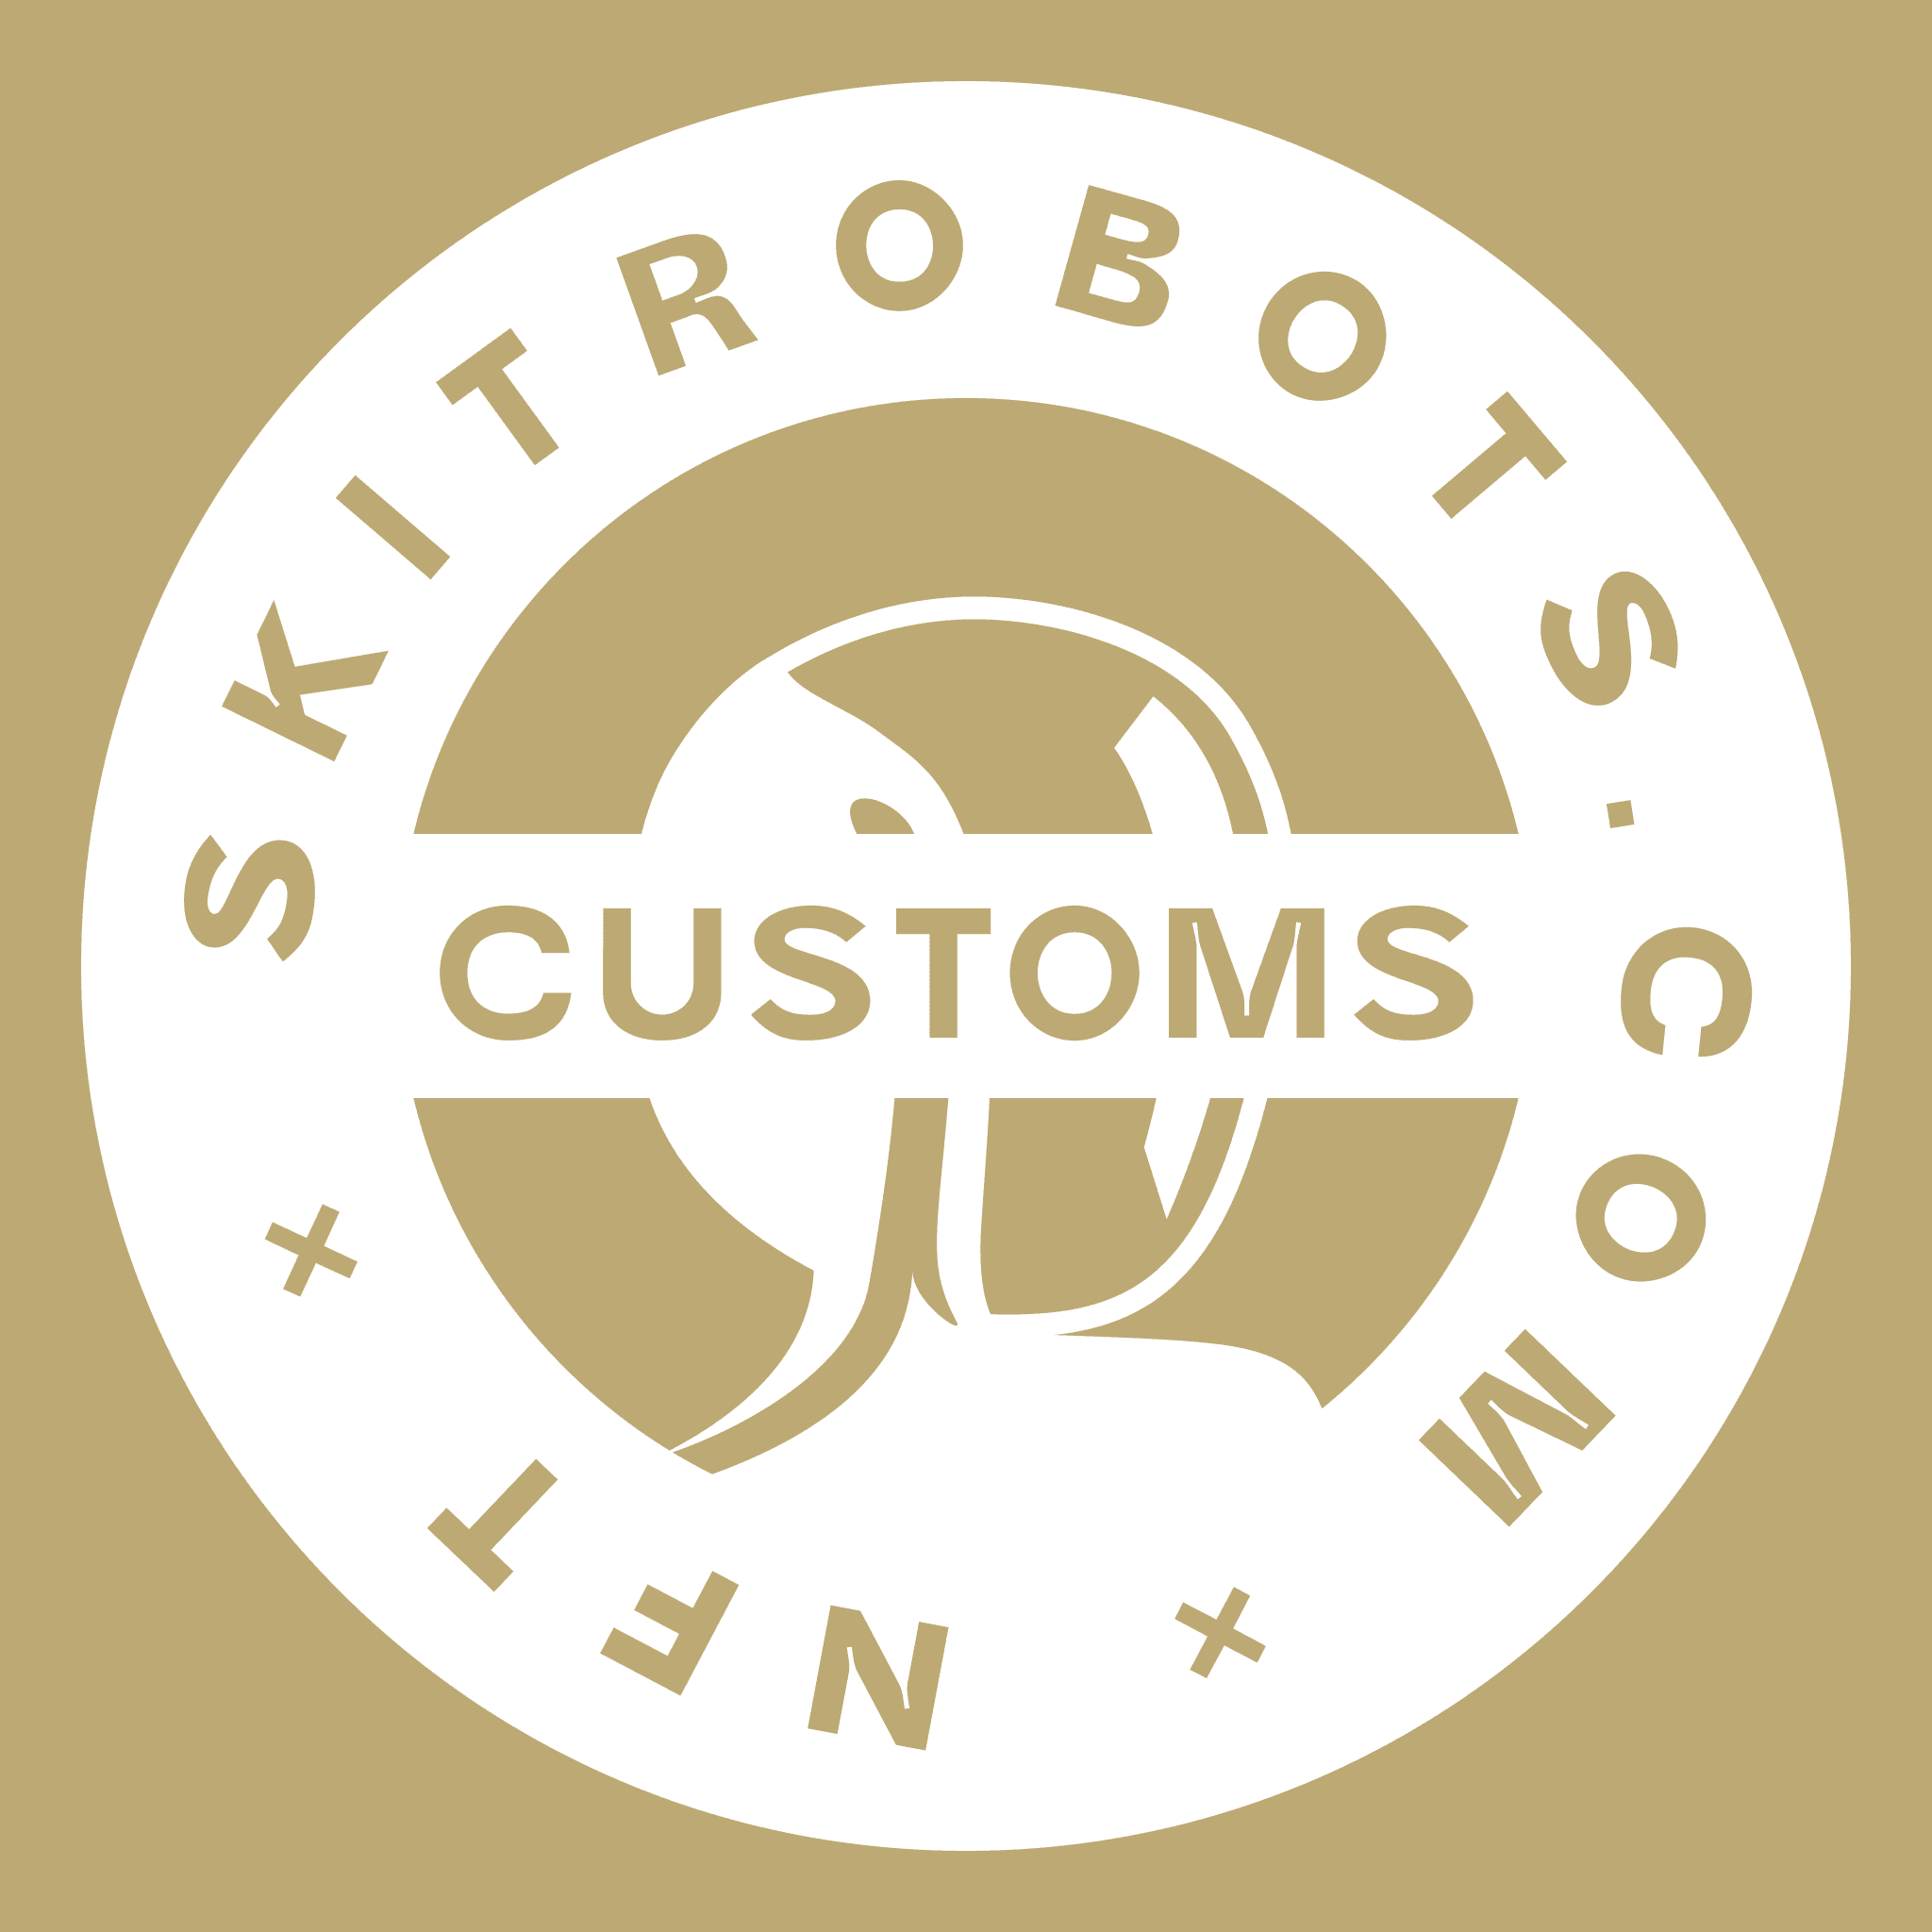 SkitRobots - Customs